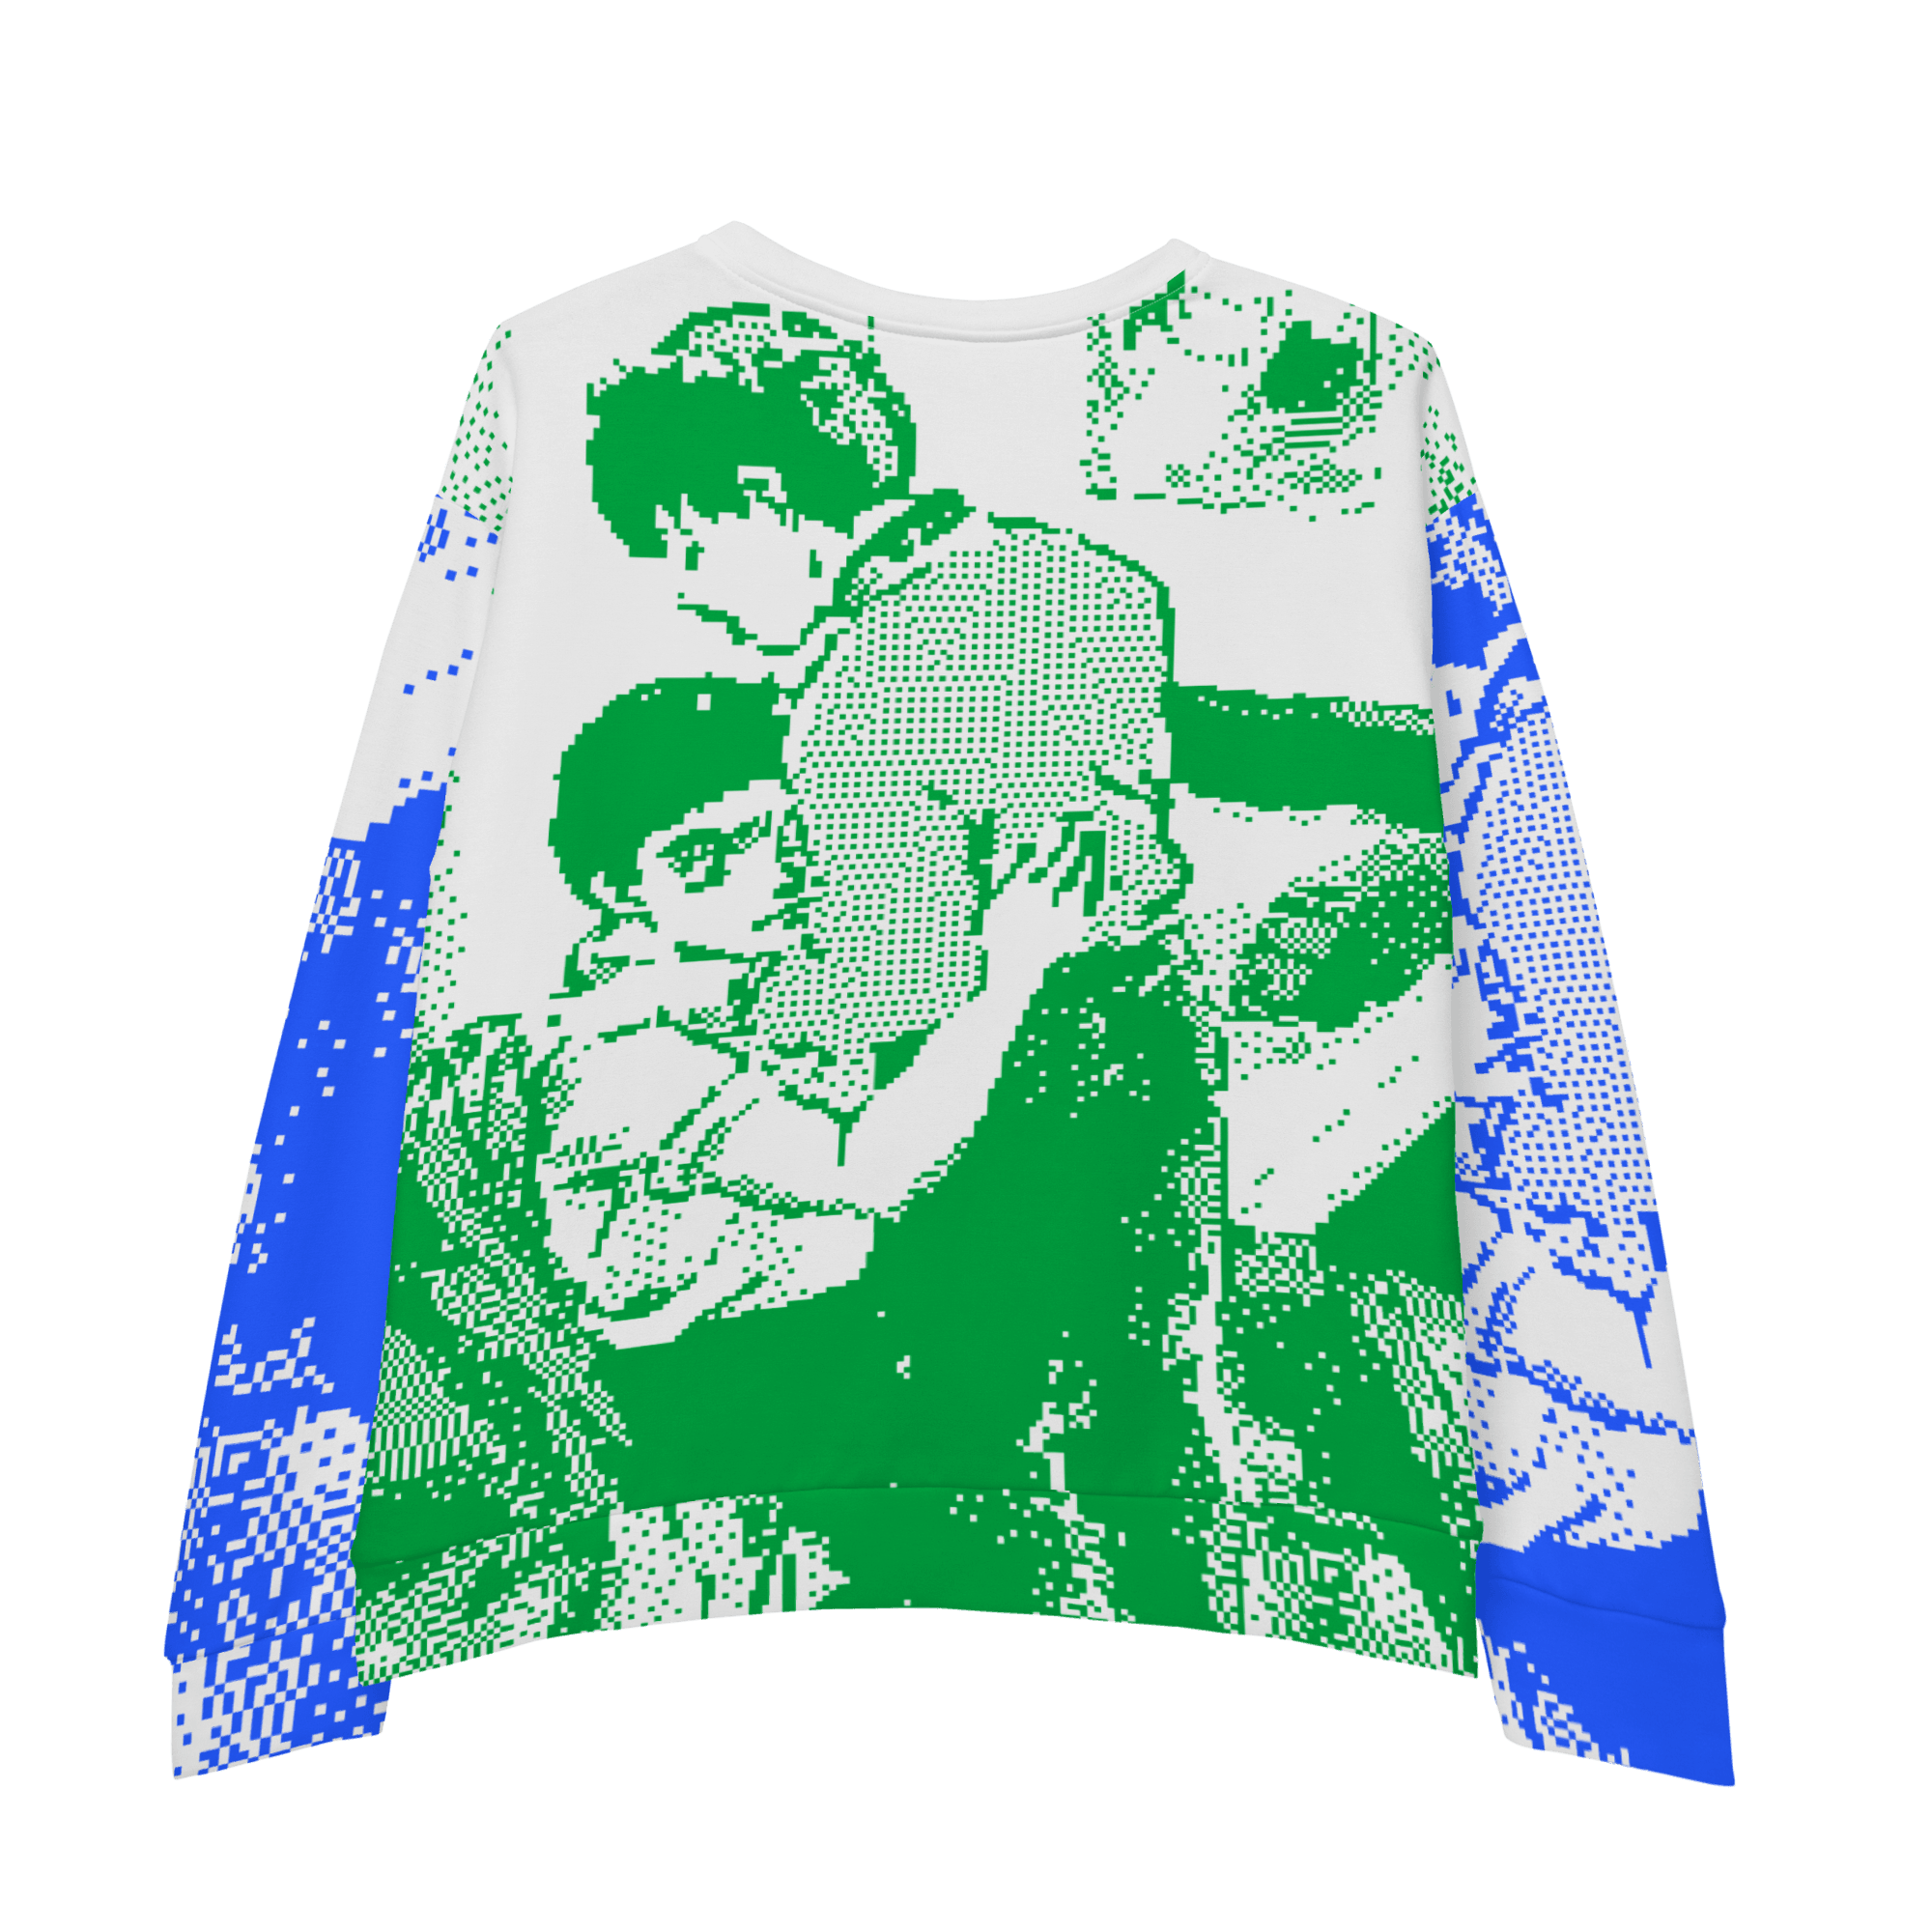 TRuST Me® Unisex Sweatshirt (7 pieces for sale) - Kikillo Club